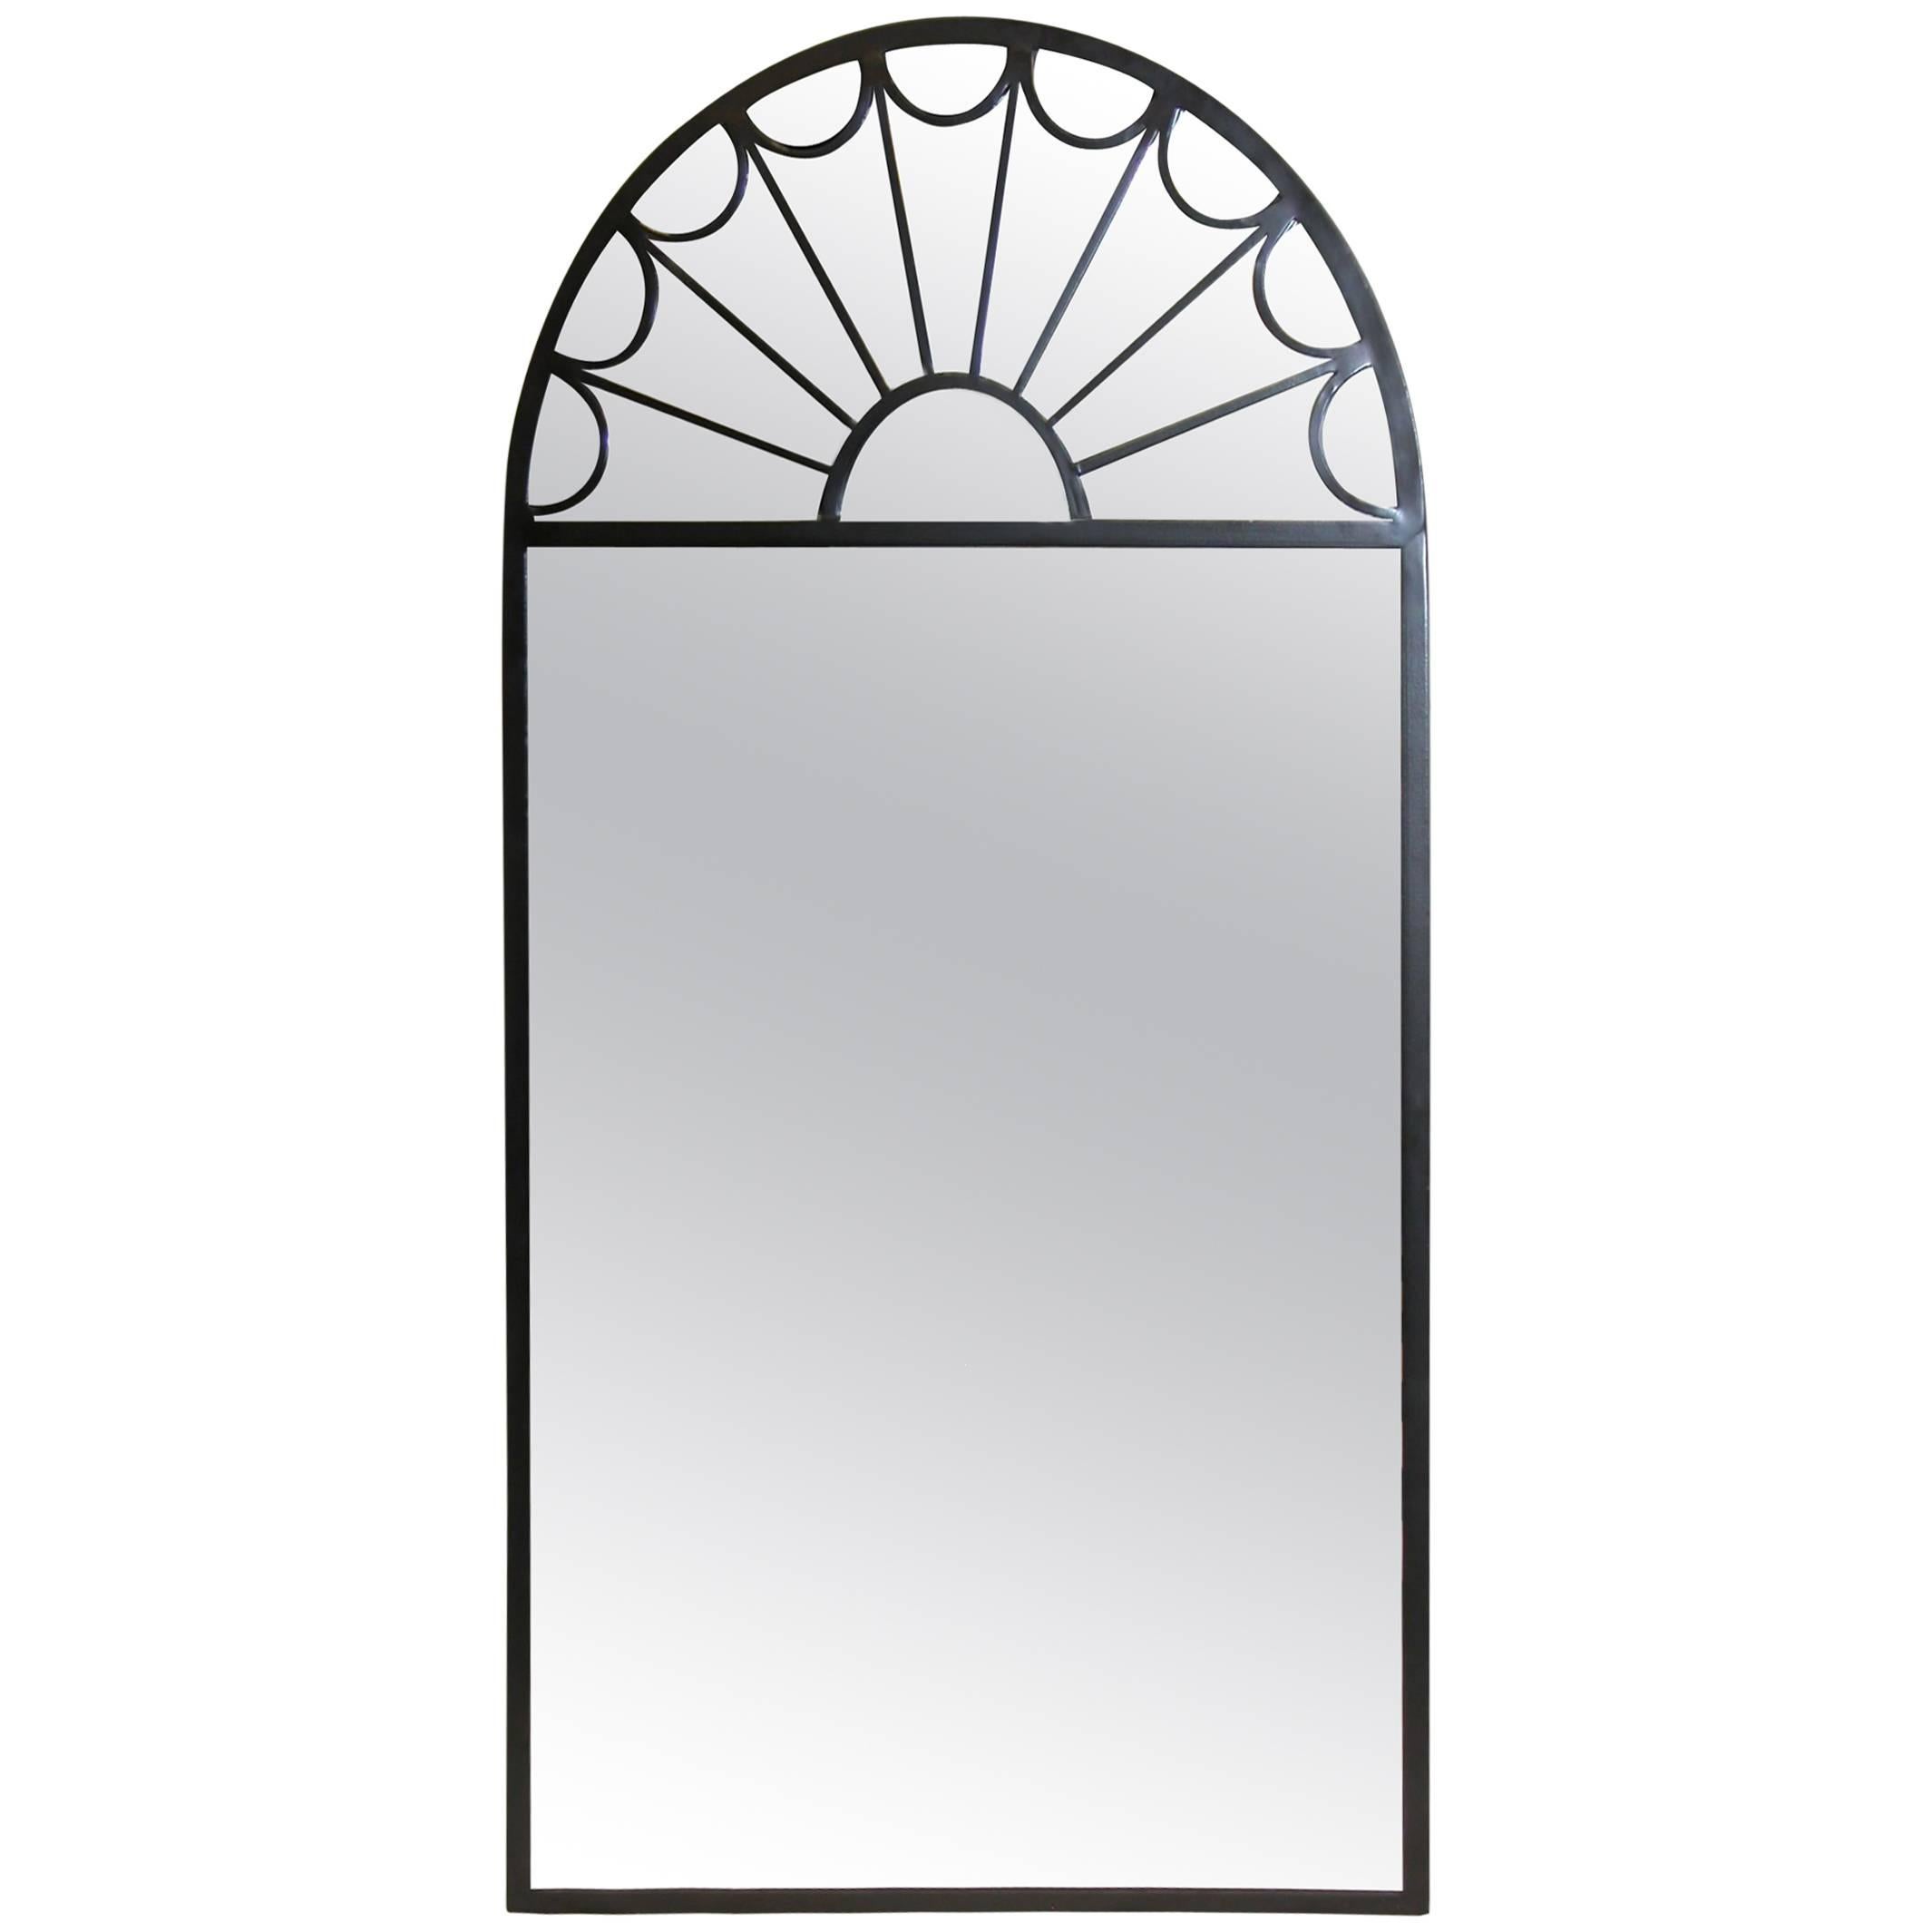 Original Yale R. Burge Wall Hung Iron Fanlight Style Mirror, 1983